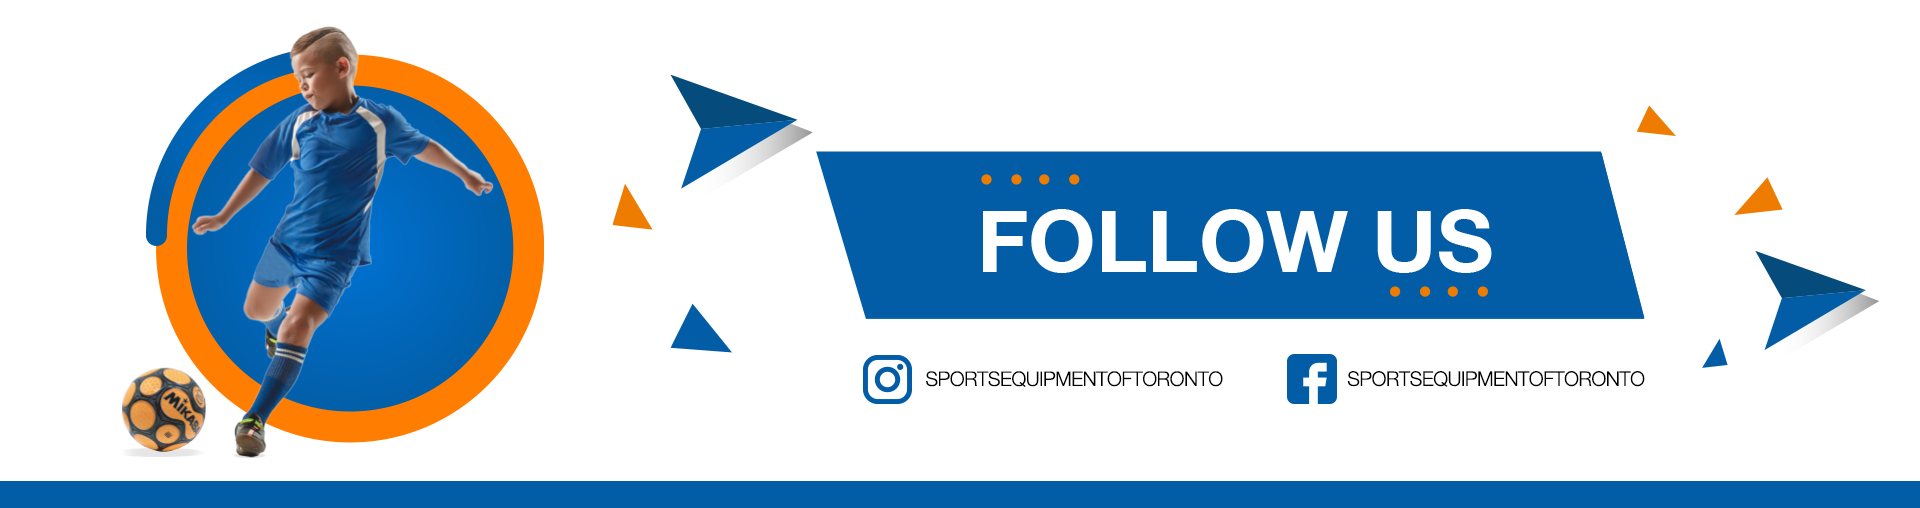 Follow Us - Sports Equipment of Toronto